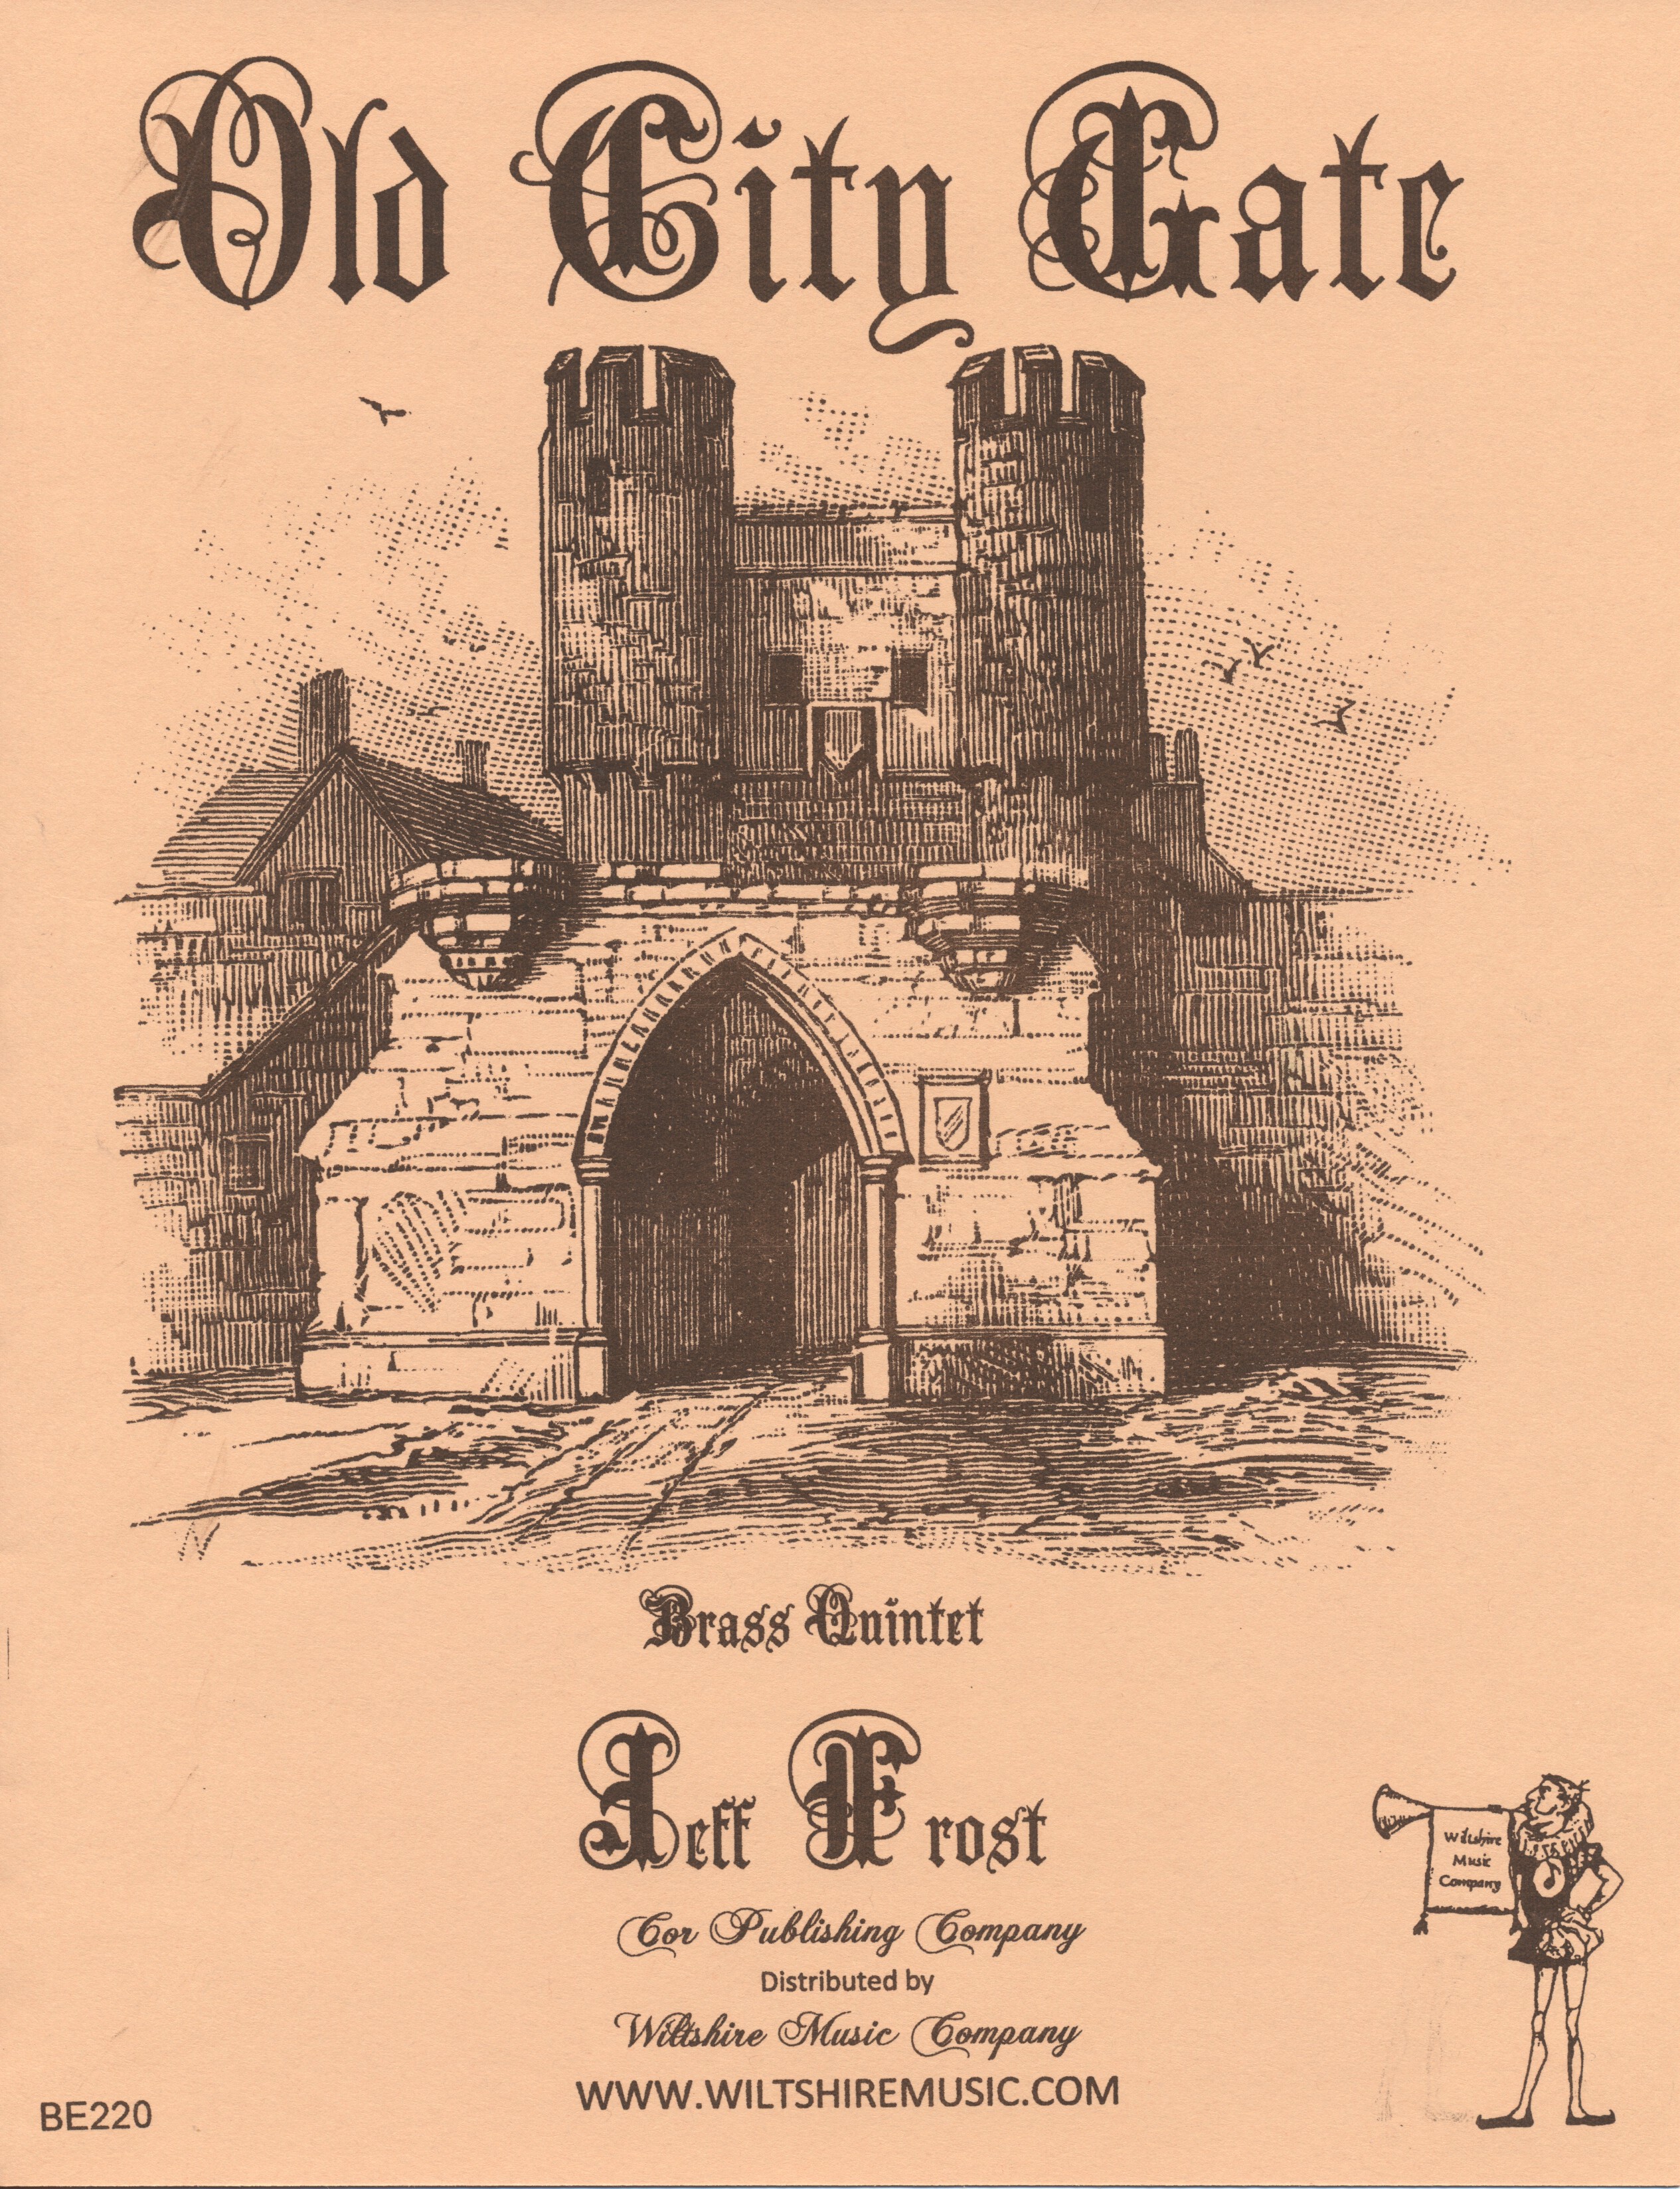 Old City Gate, Jeff Frost